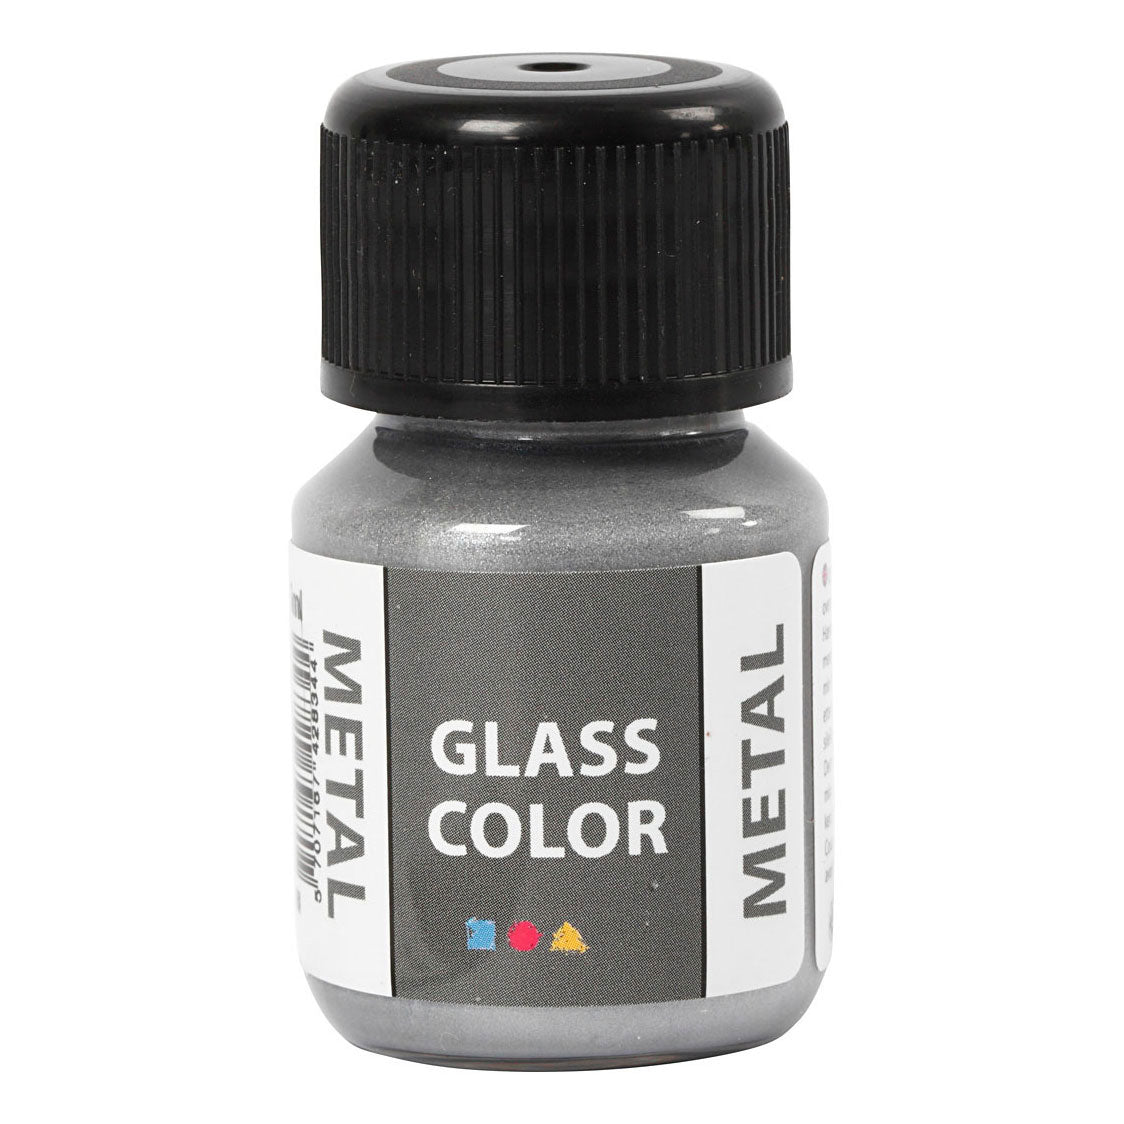 Creativ Company Glass Color Metal Paint Plata, 30ml